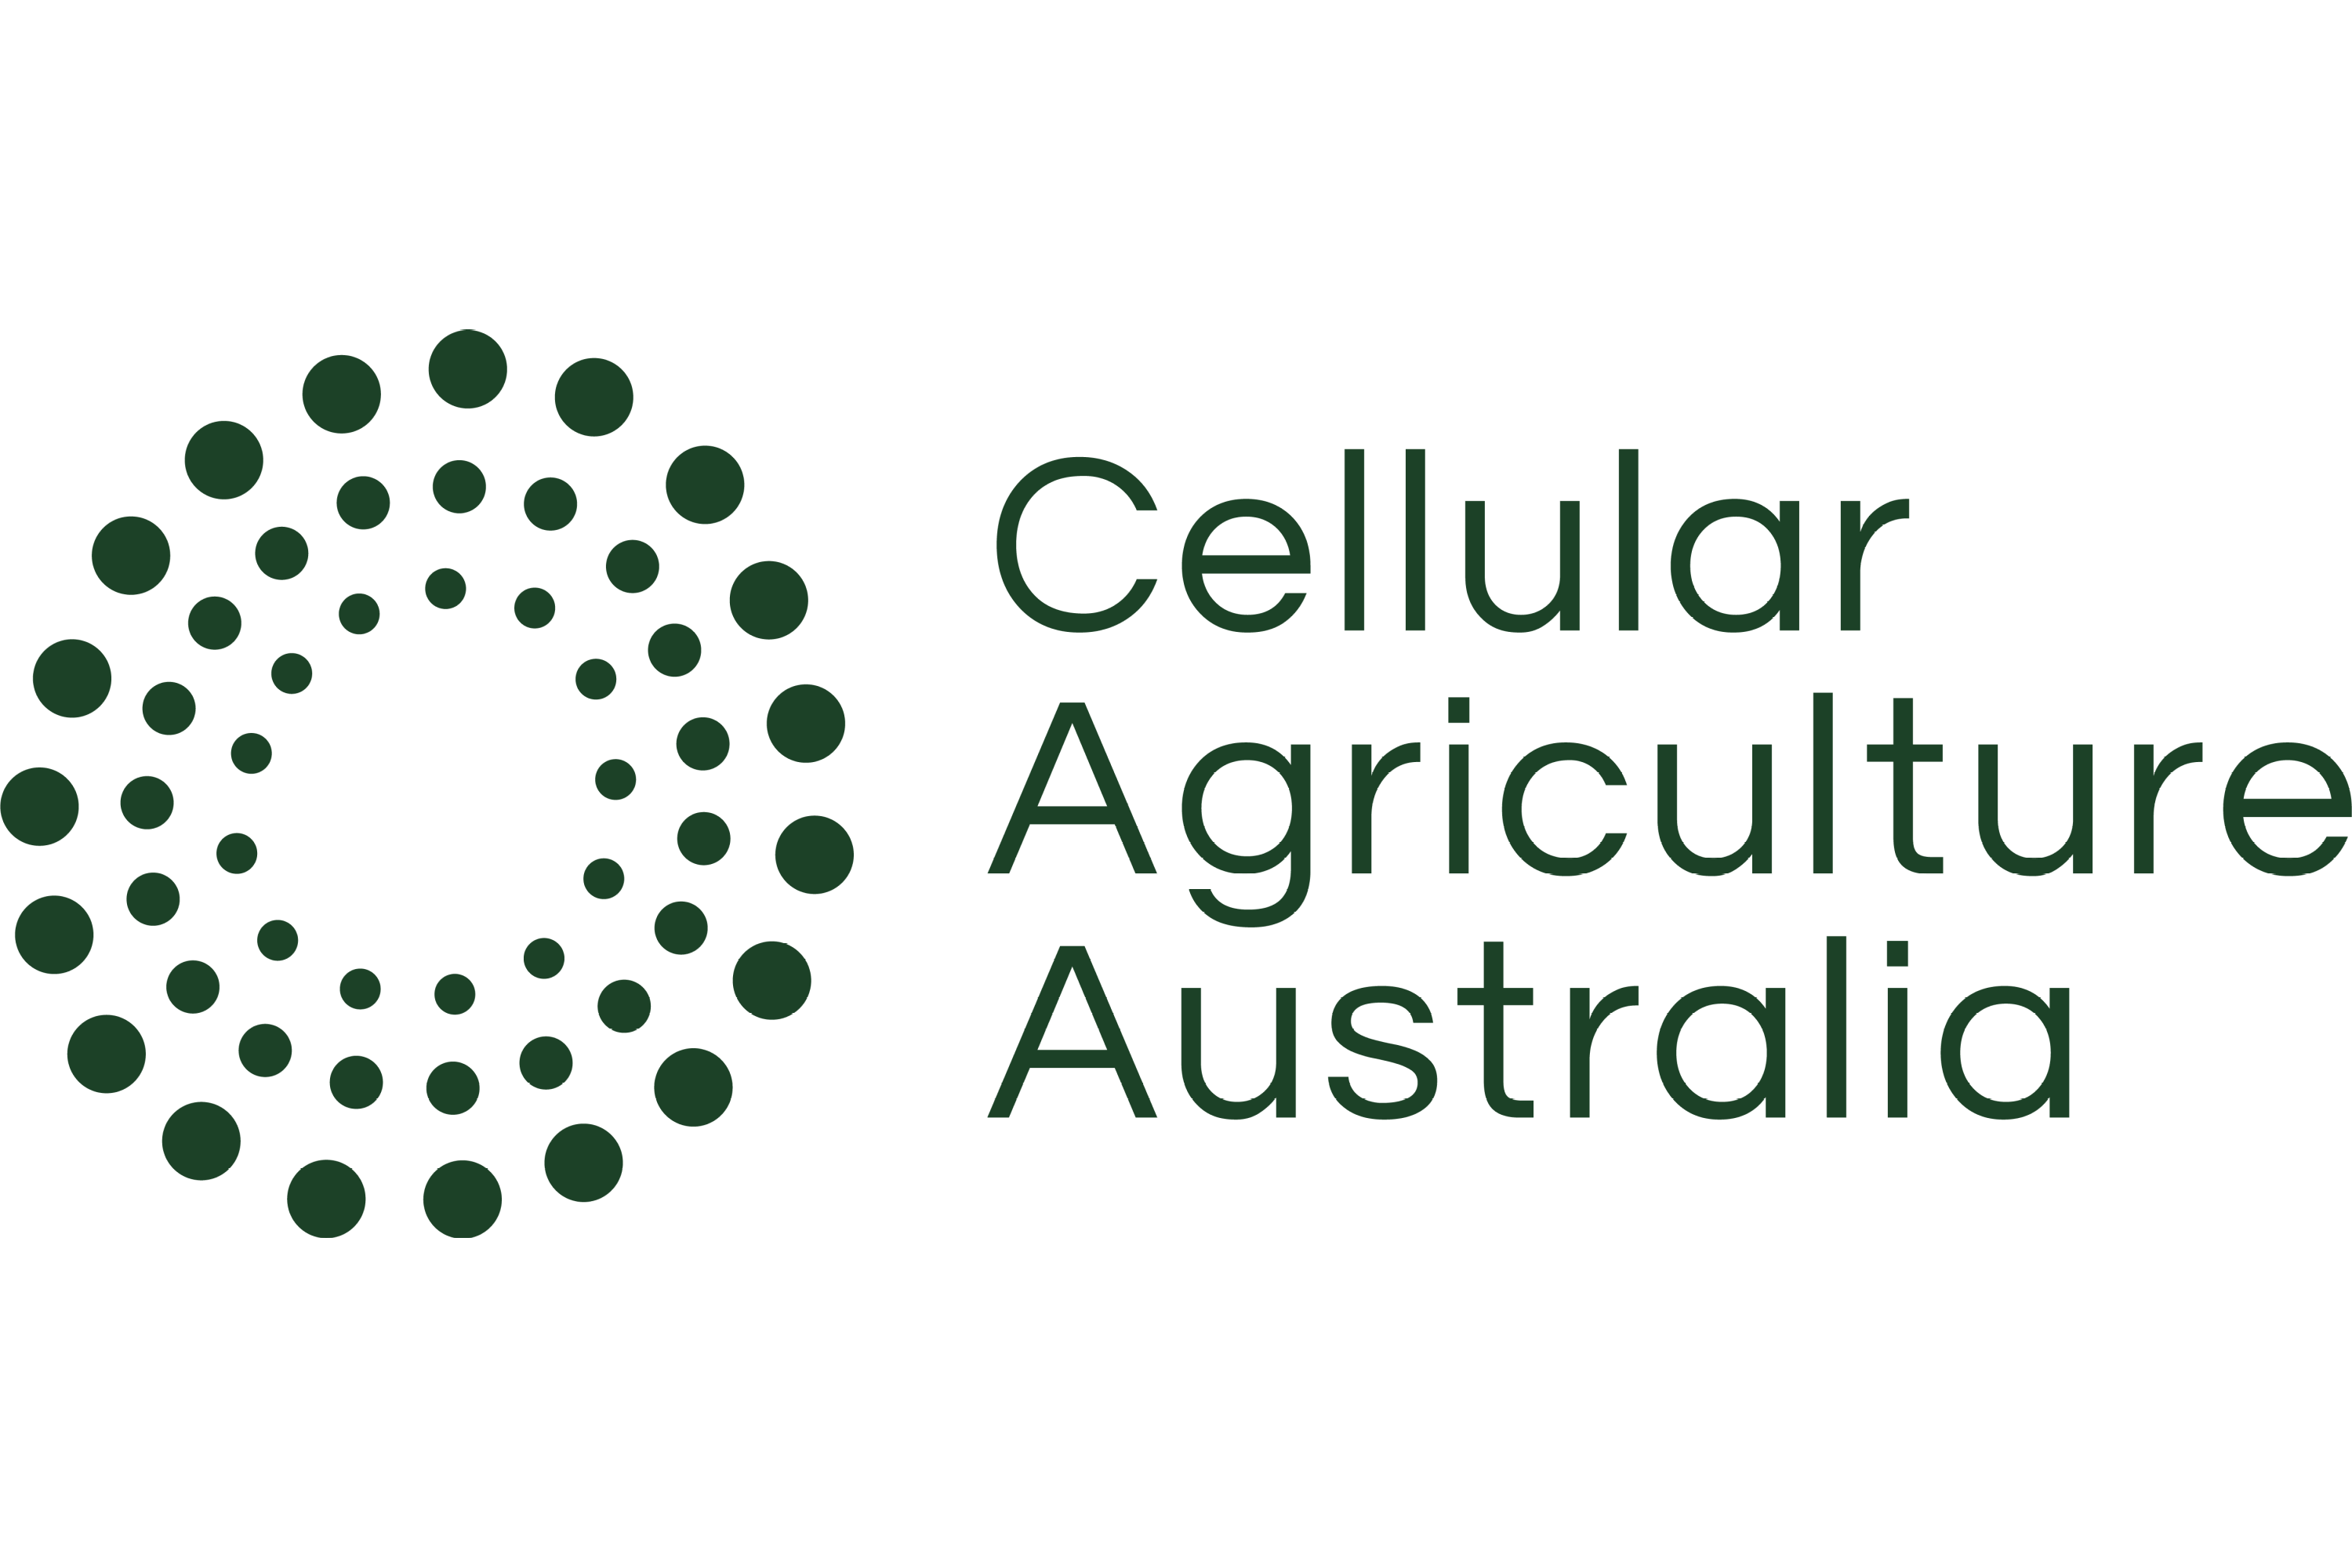 Cellular Agriculture Australia Logo